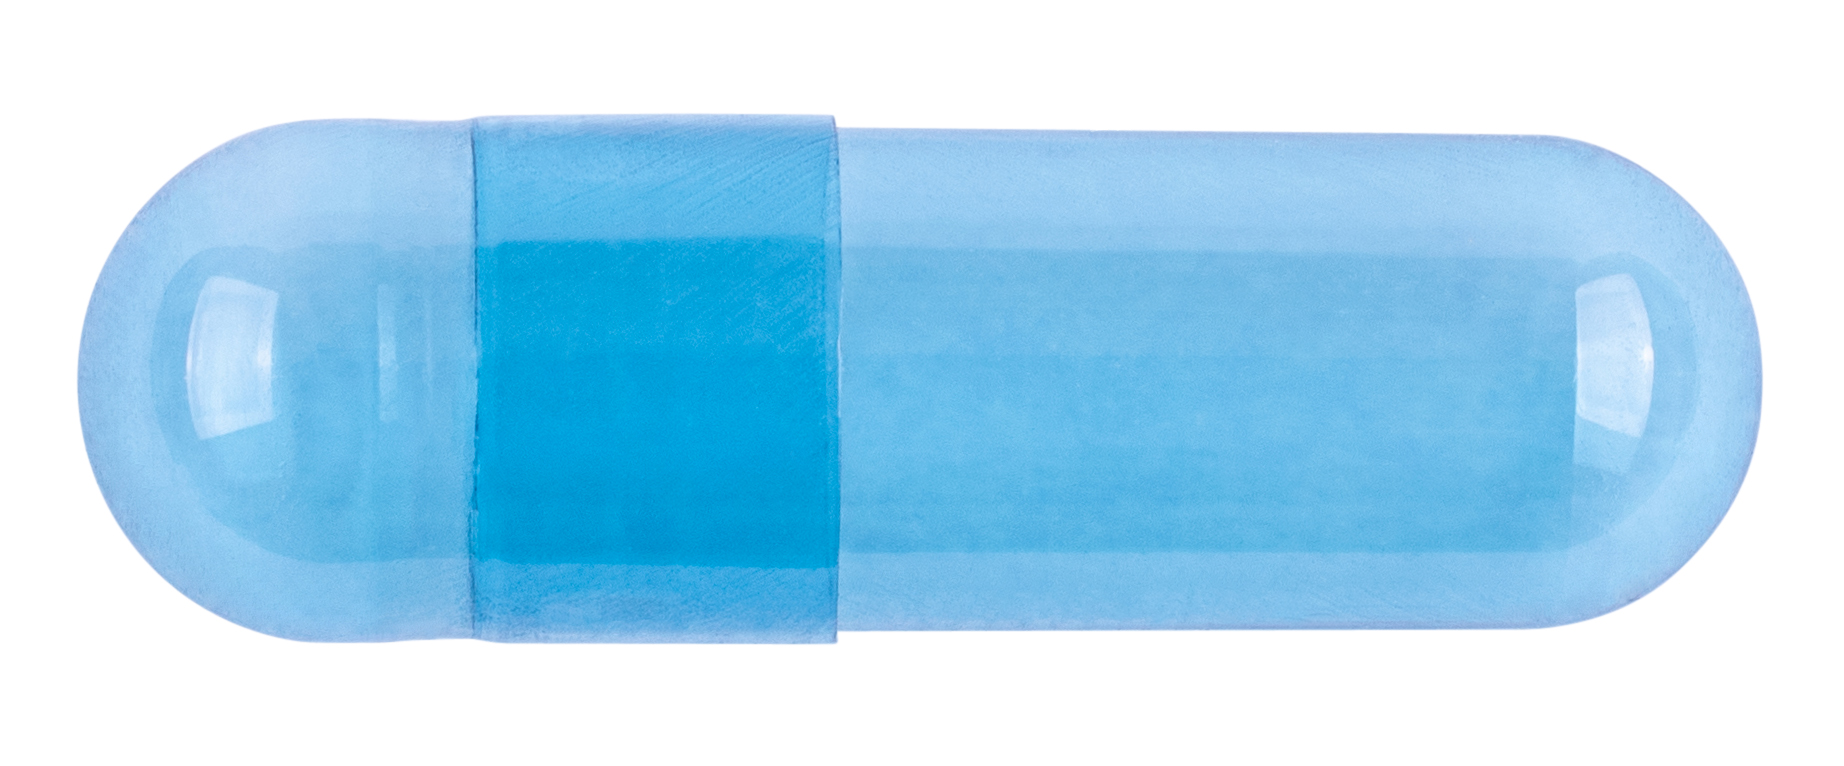 Capsules (Κάψουλες) 500mg N0 1000τμχ Μπλε Διαφανείς Φυτικές / Blue Transparent Vegetarian